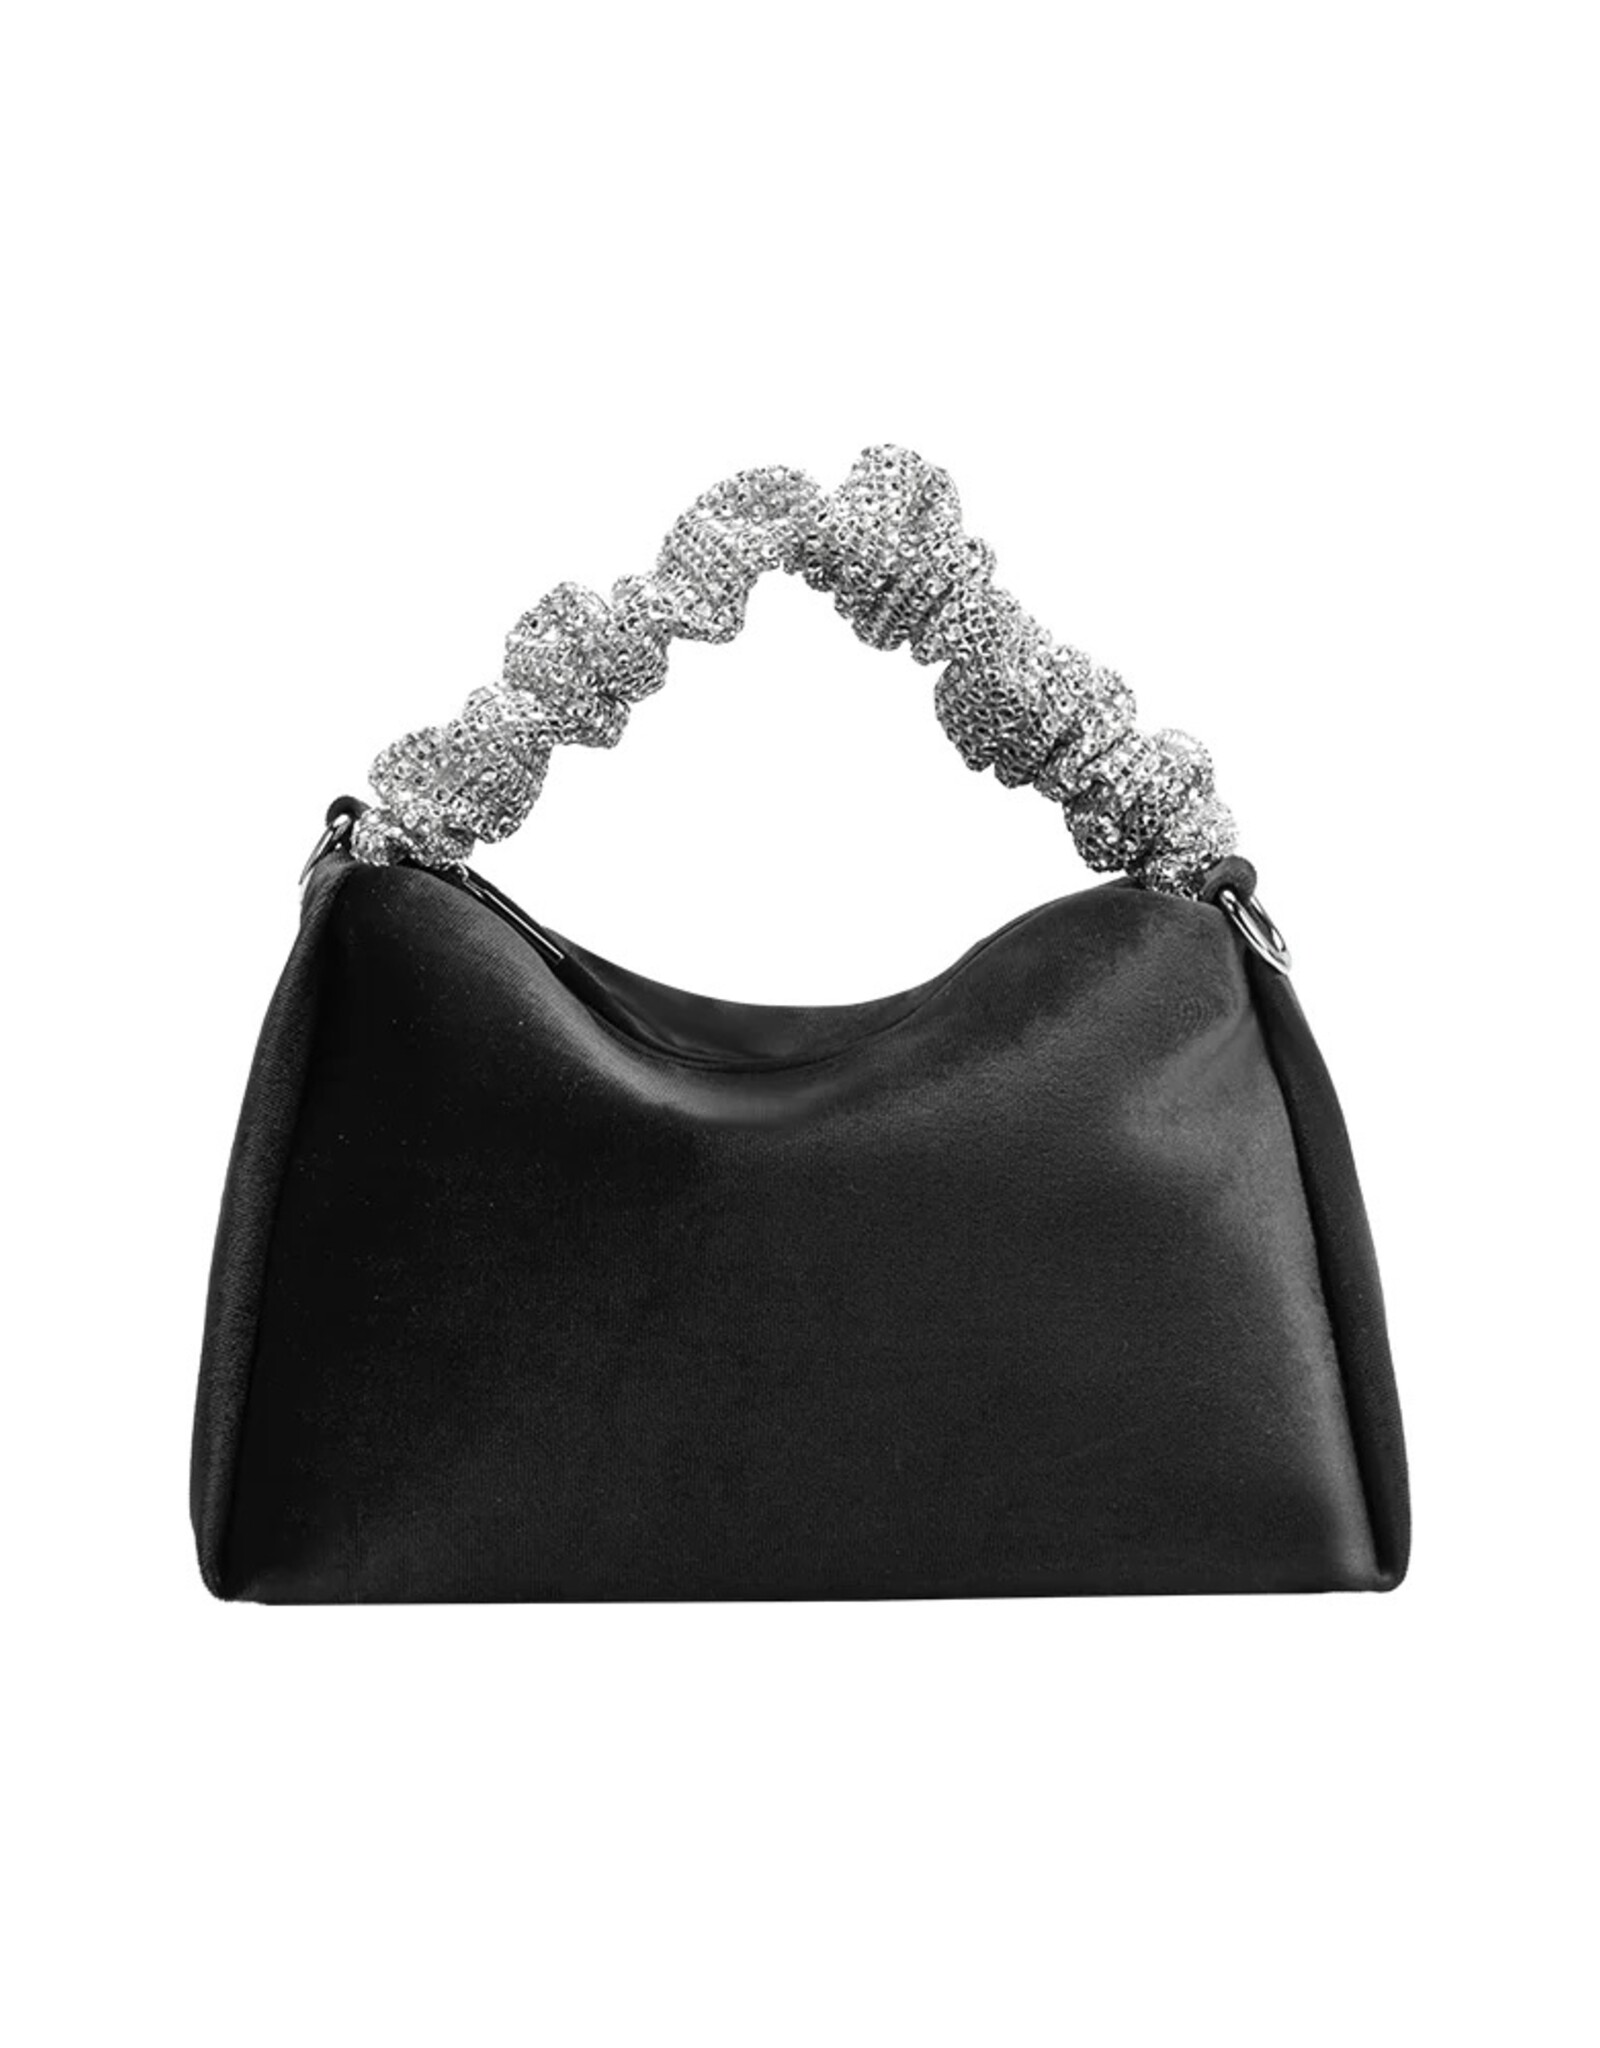 Melie Bianco Estela Black Top Handle Bag